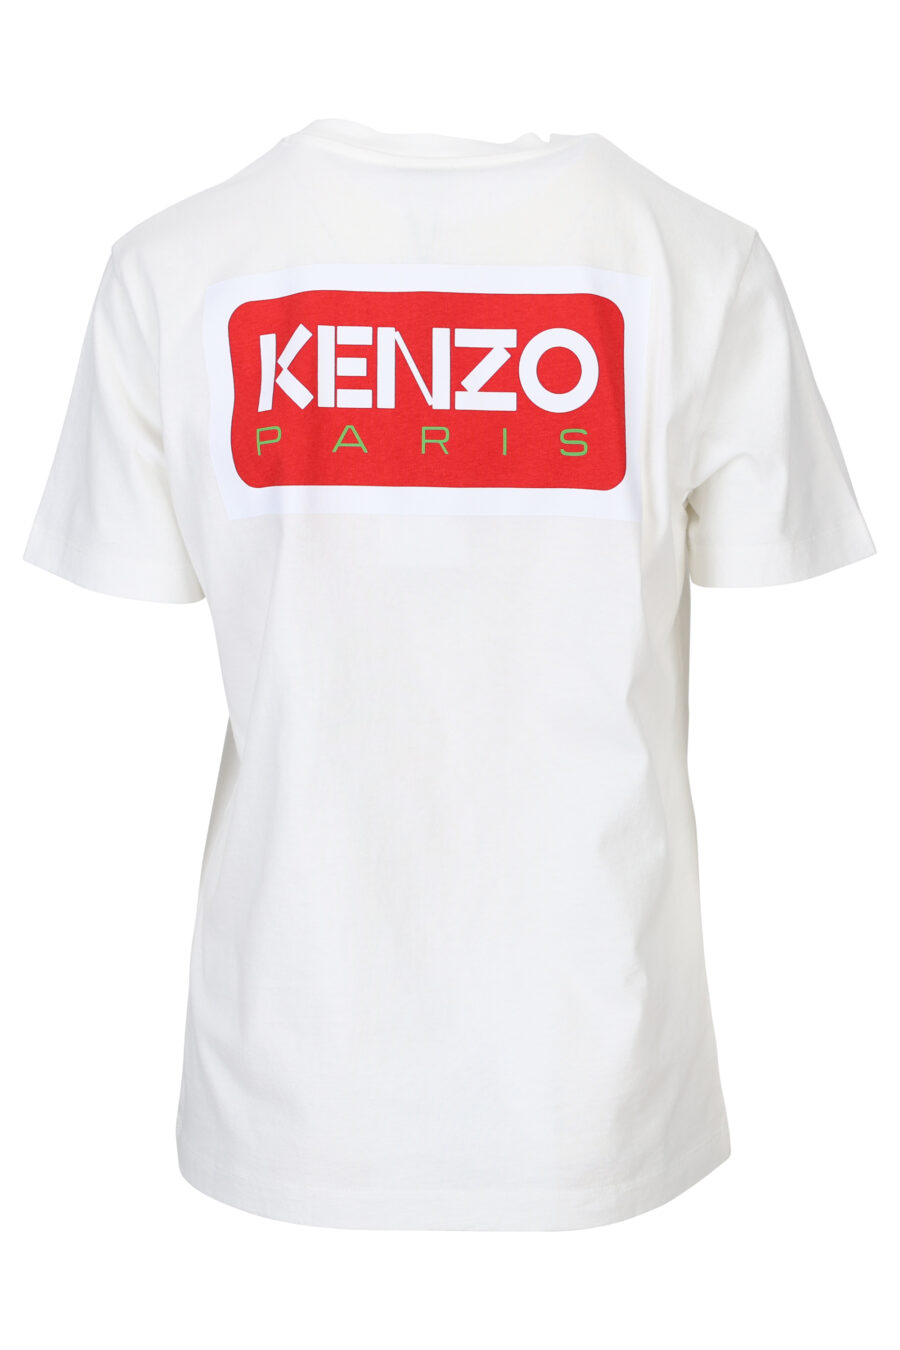 T-shirt blanc oversize avec logo "kenzo paris" - 3612230520875 1